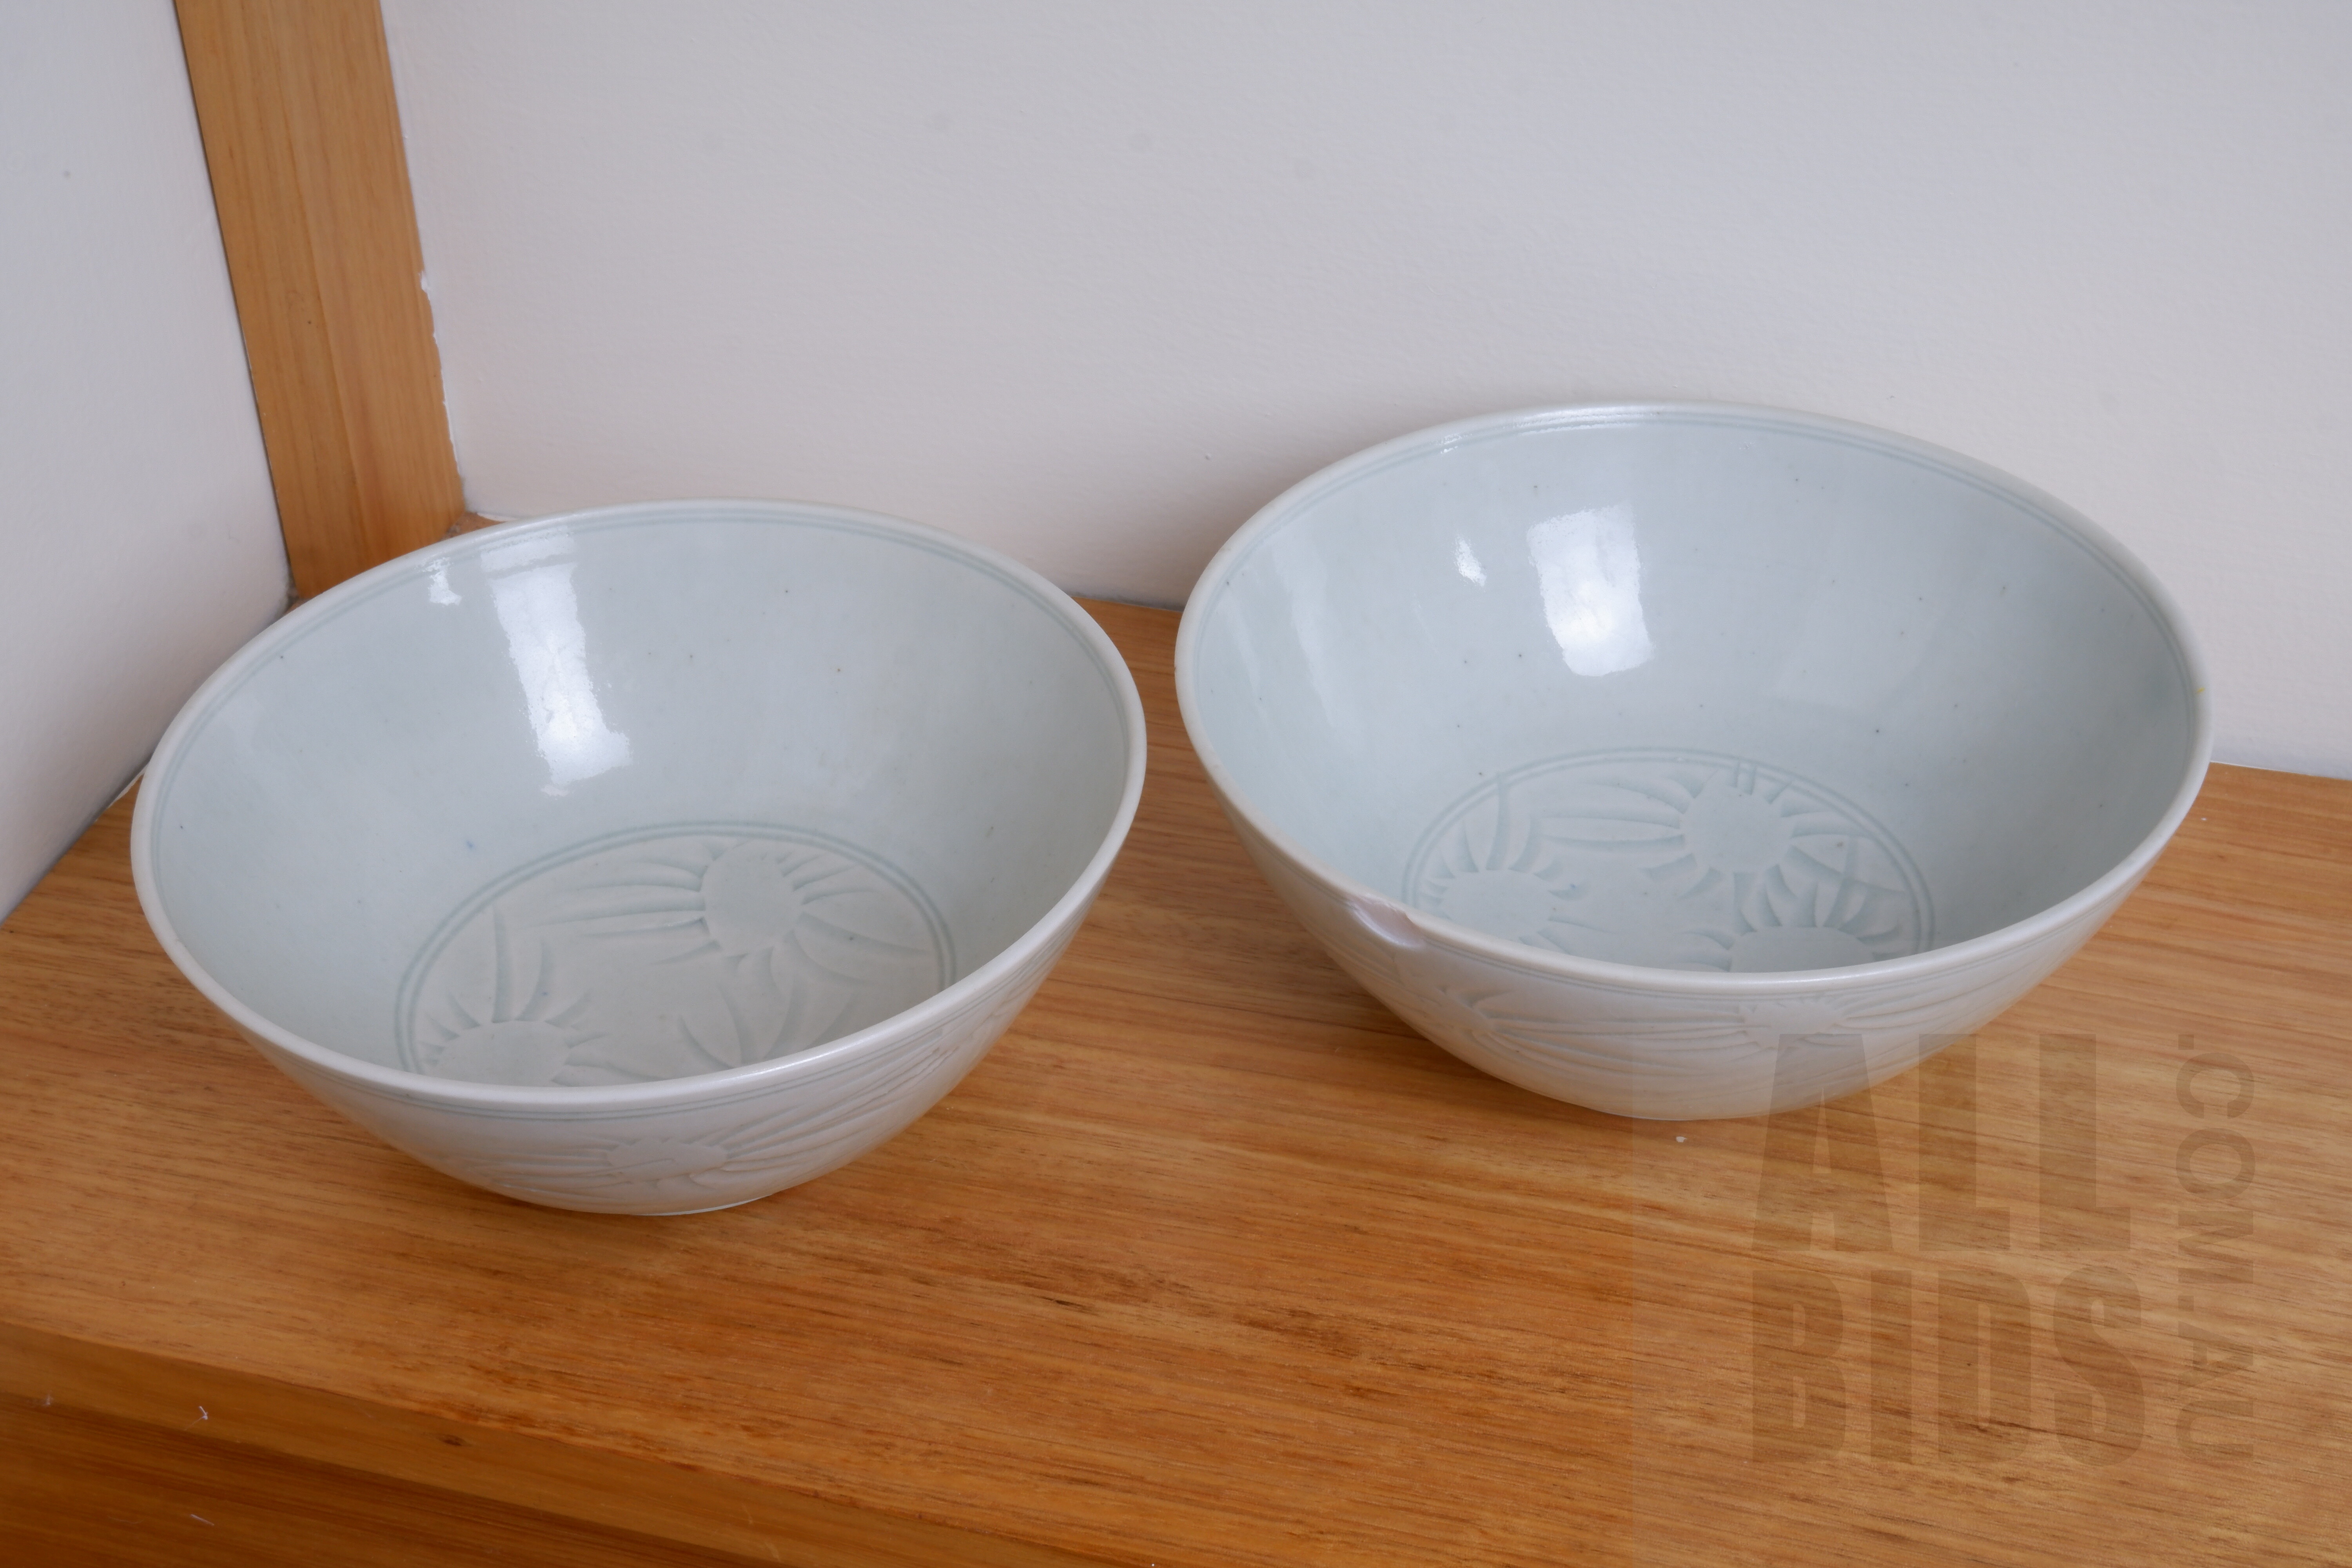 'Richard Brooks (1950-) Two Celadon Glazed Ceramic Bowls'